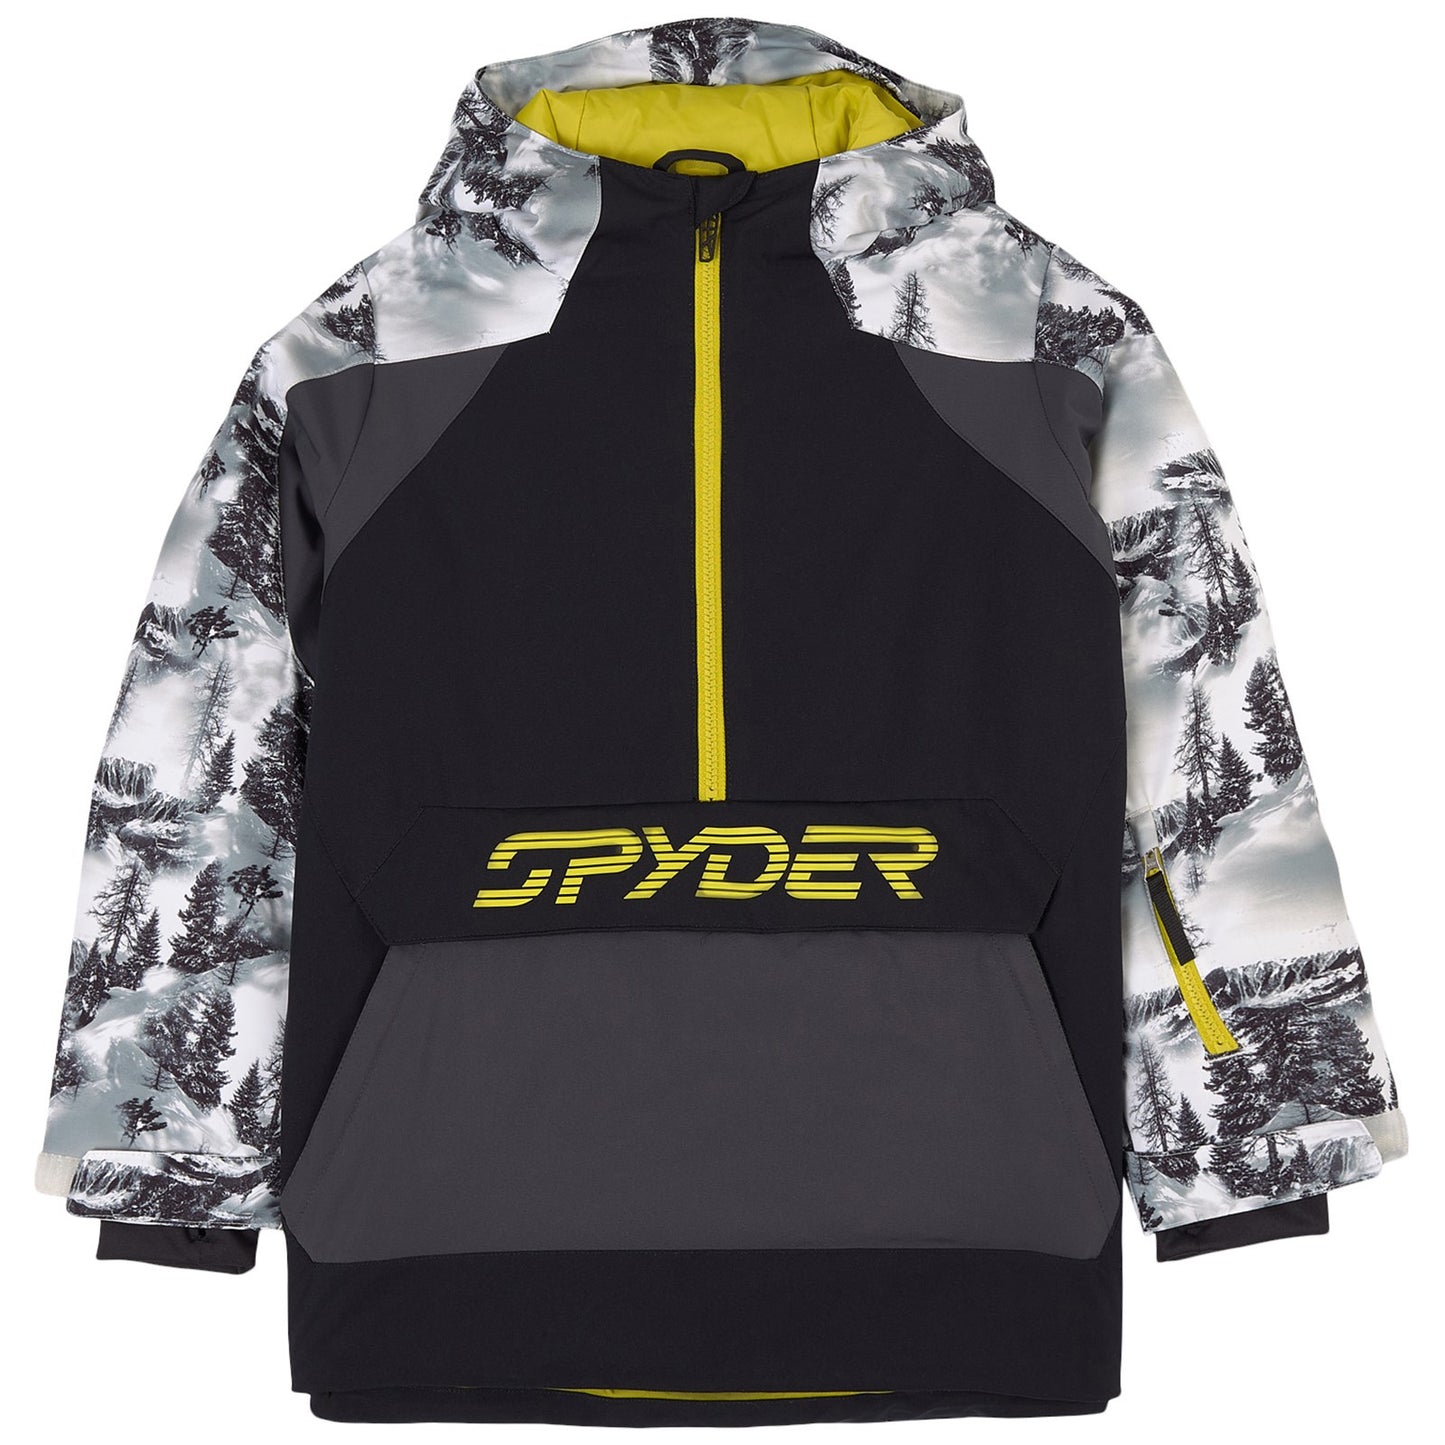 Spyder Jasper Boys Jacket